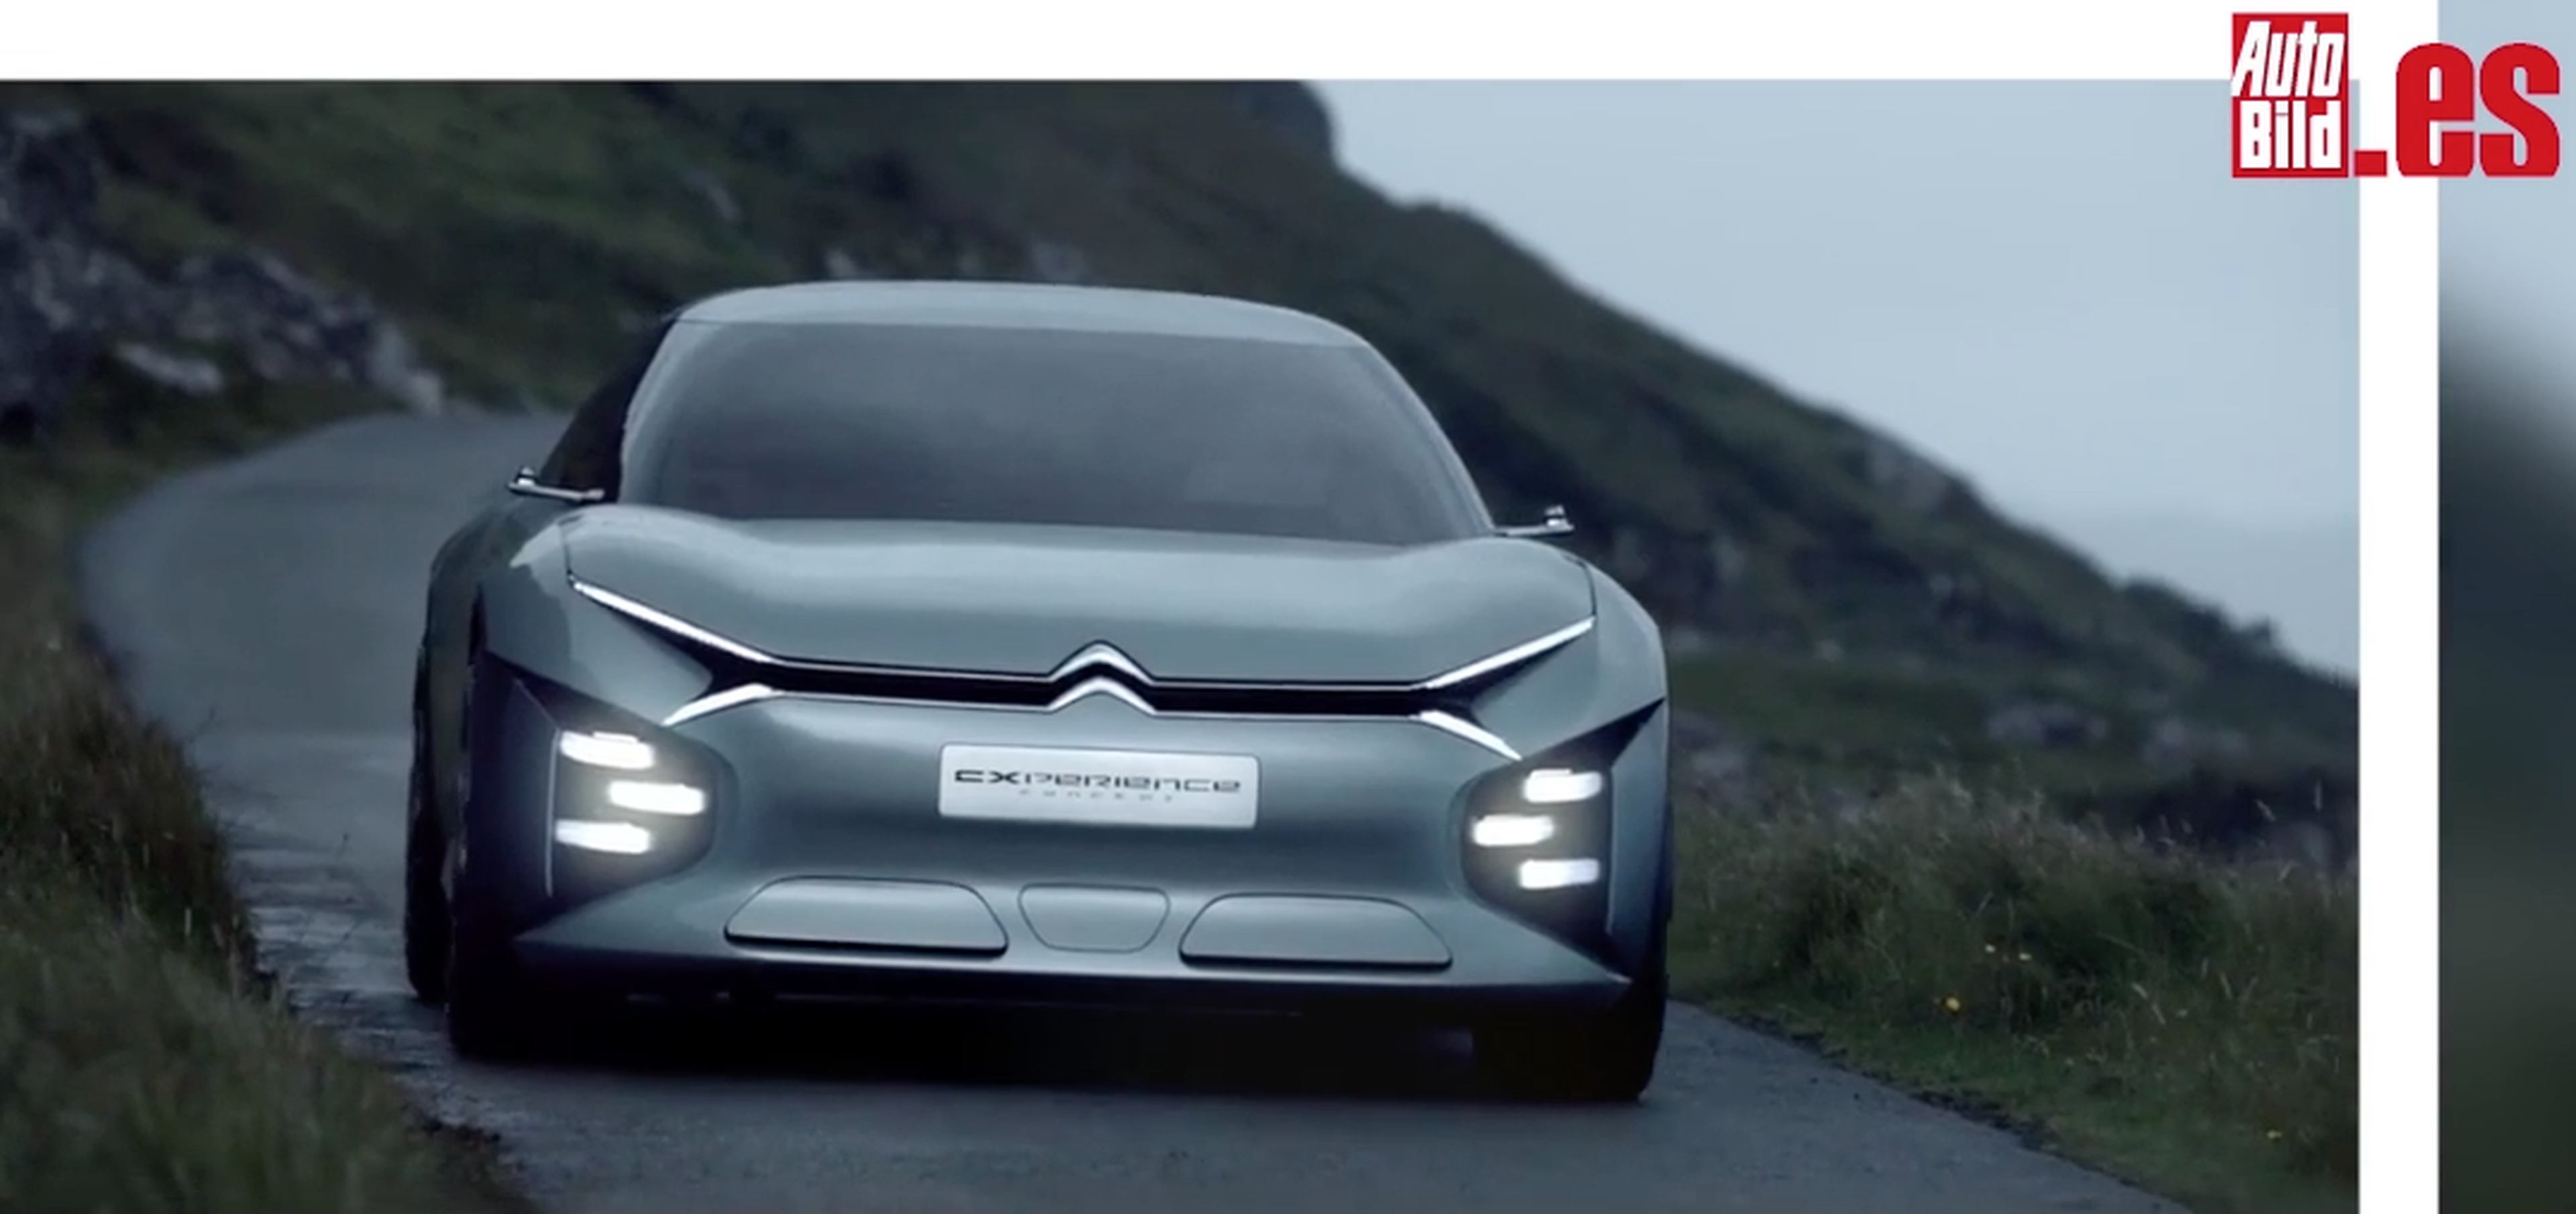 VÍDEO: Citroën CXperience Concept, ¡qué elegancia de prototipo!